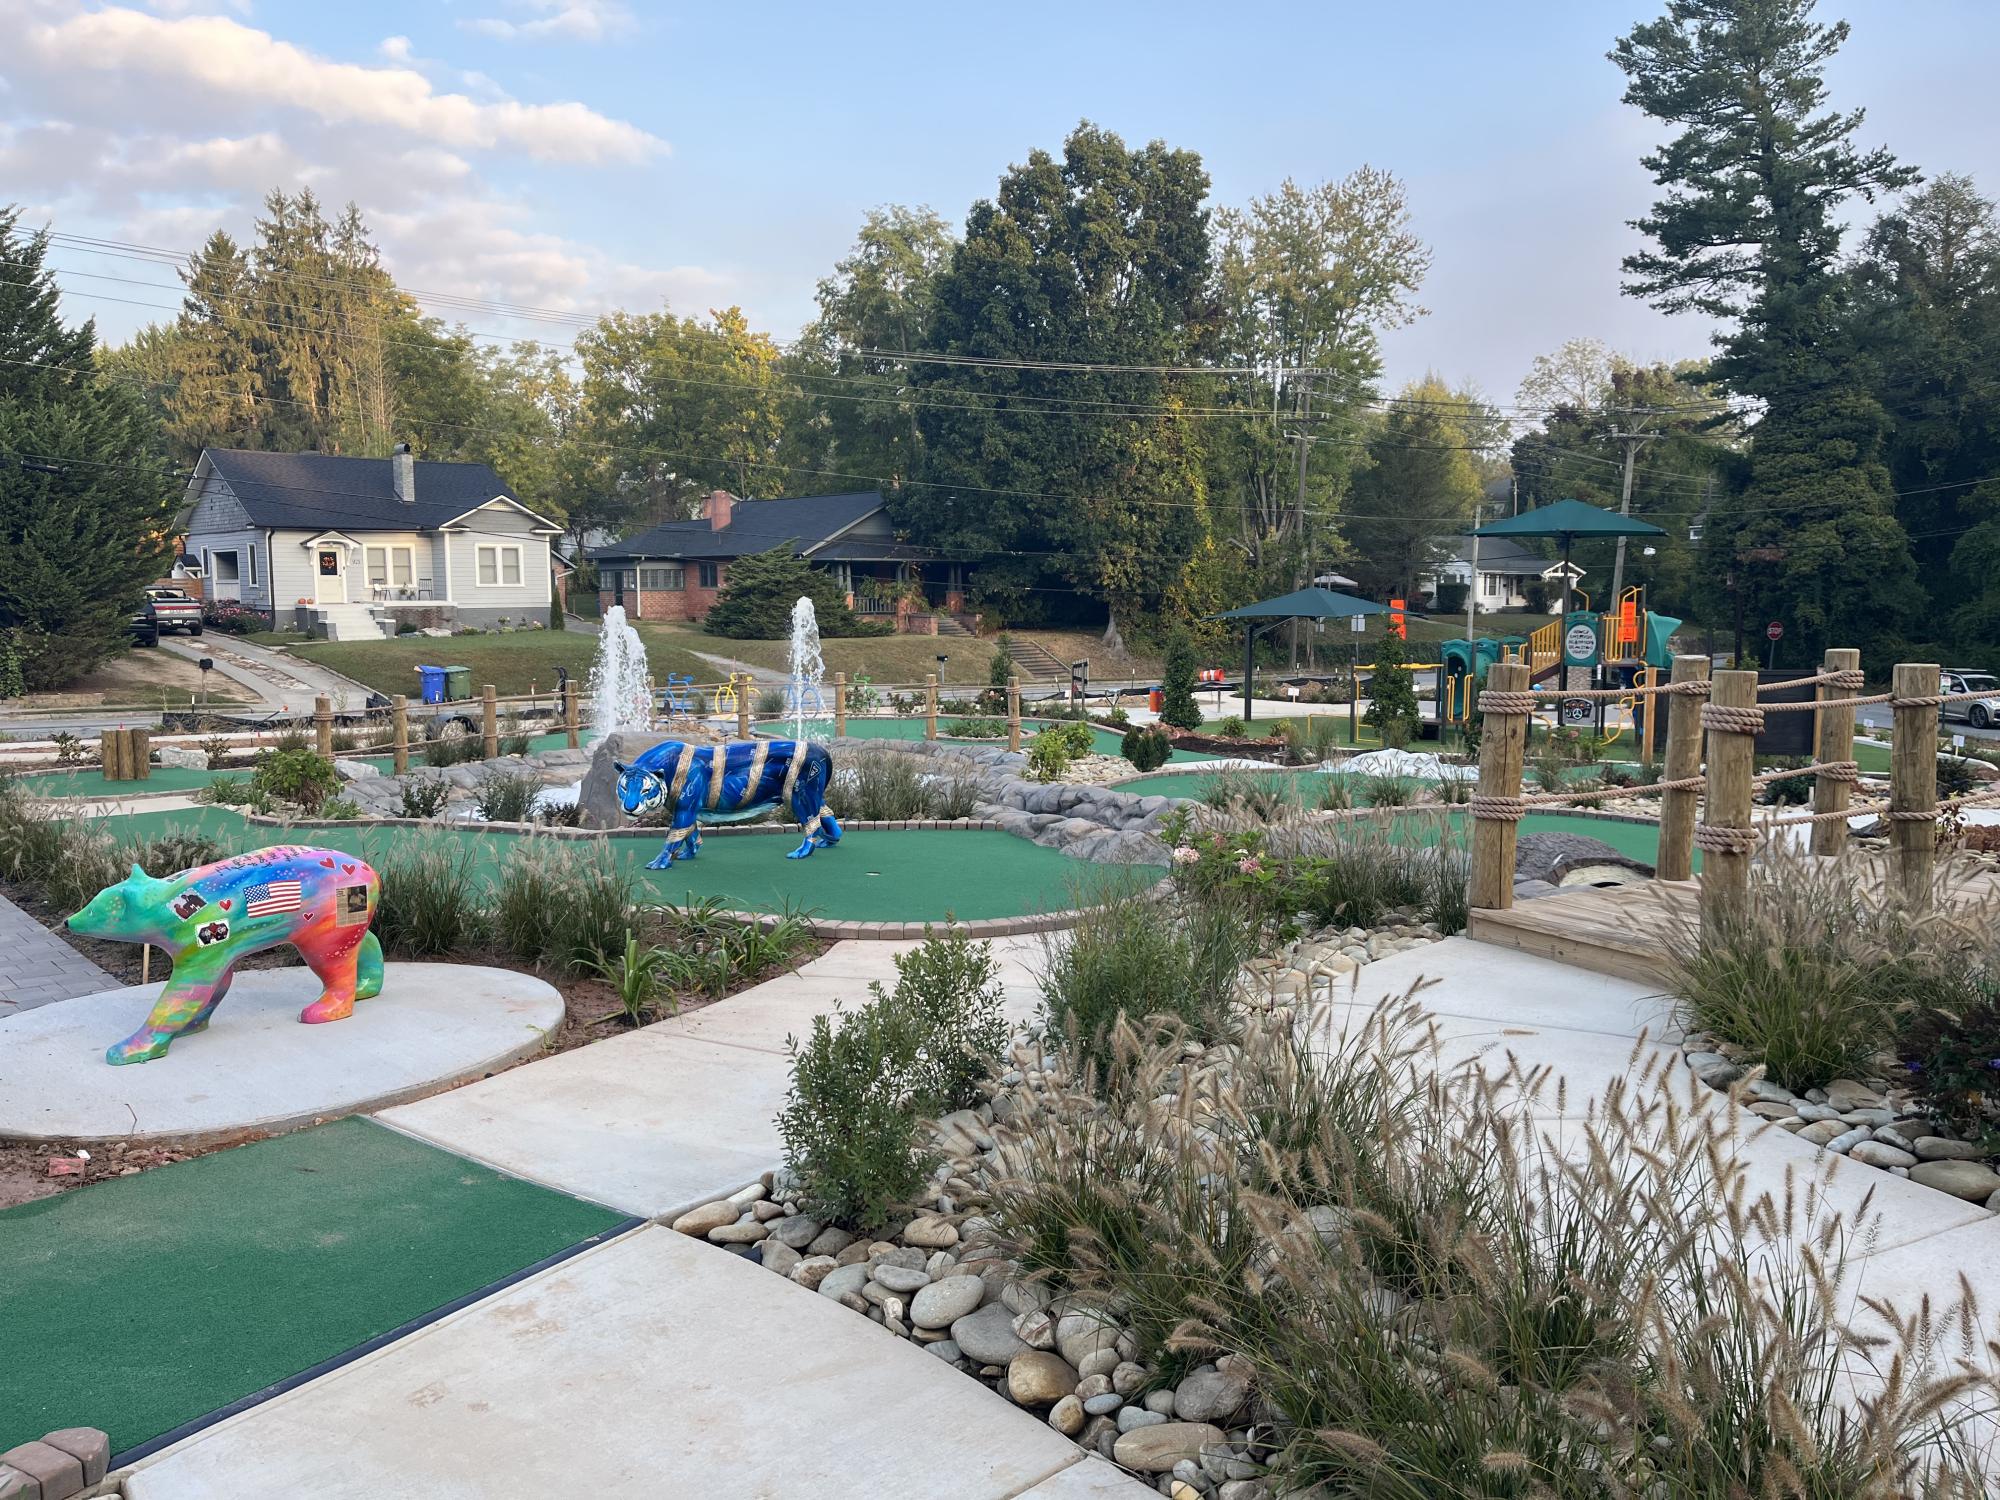 Mini - Golf / Edwards Park, City of Hendersonville, NC